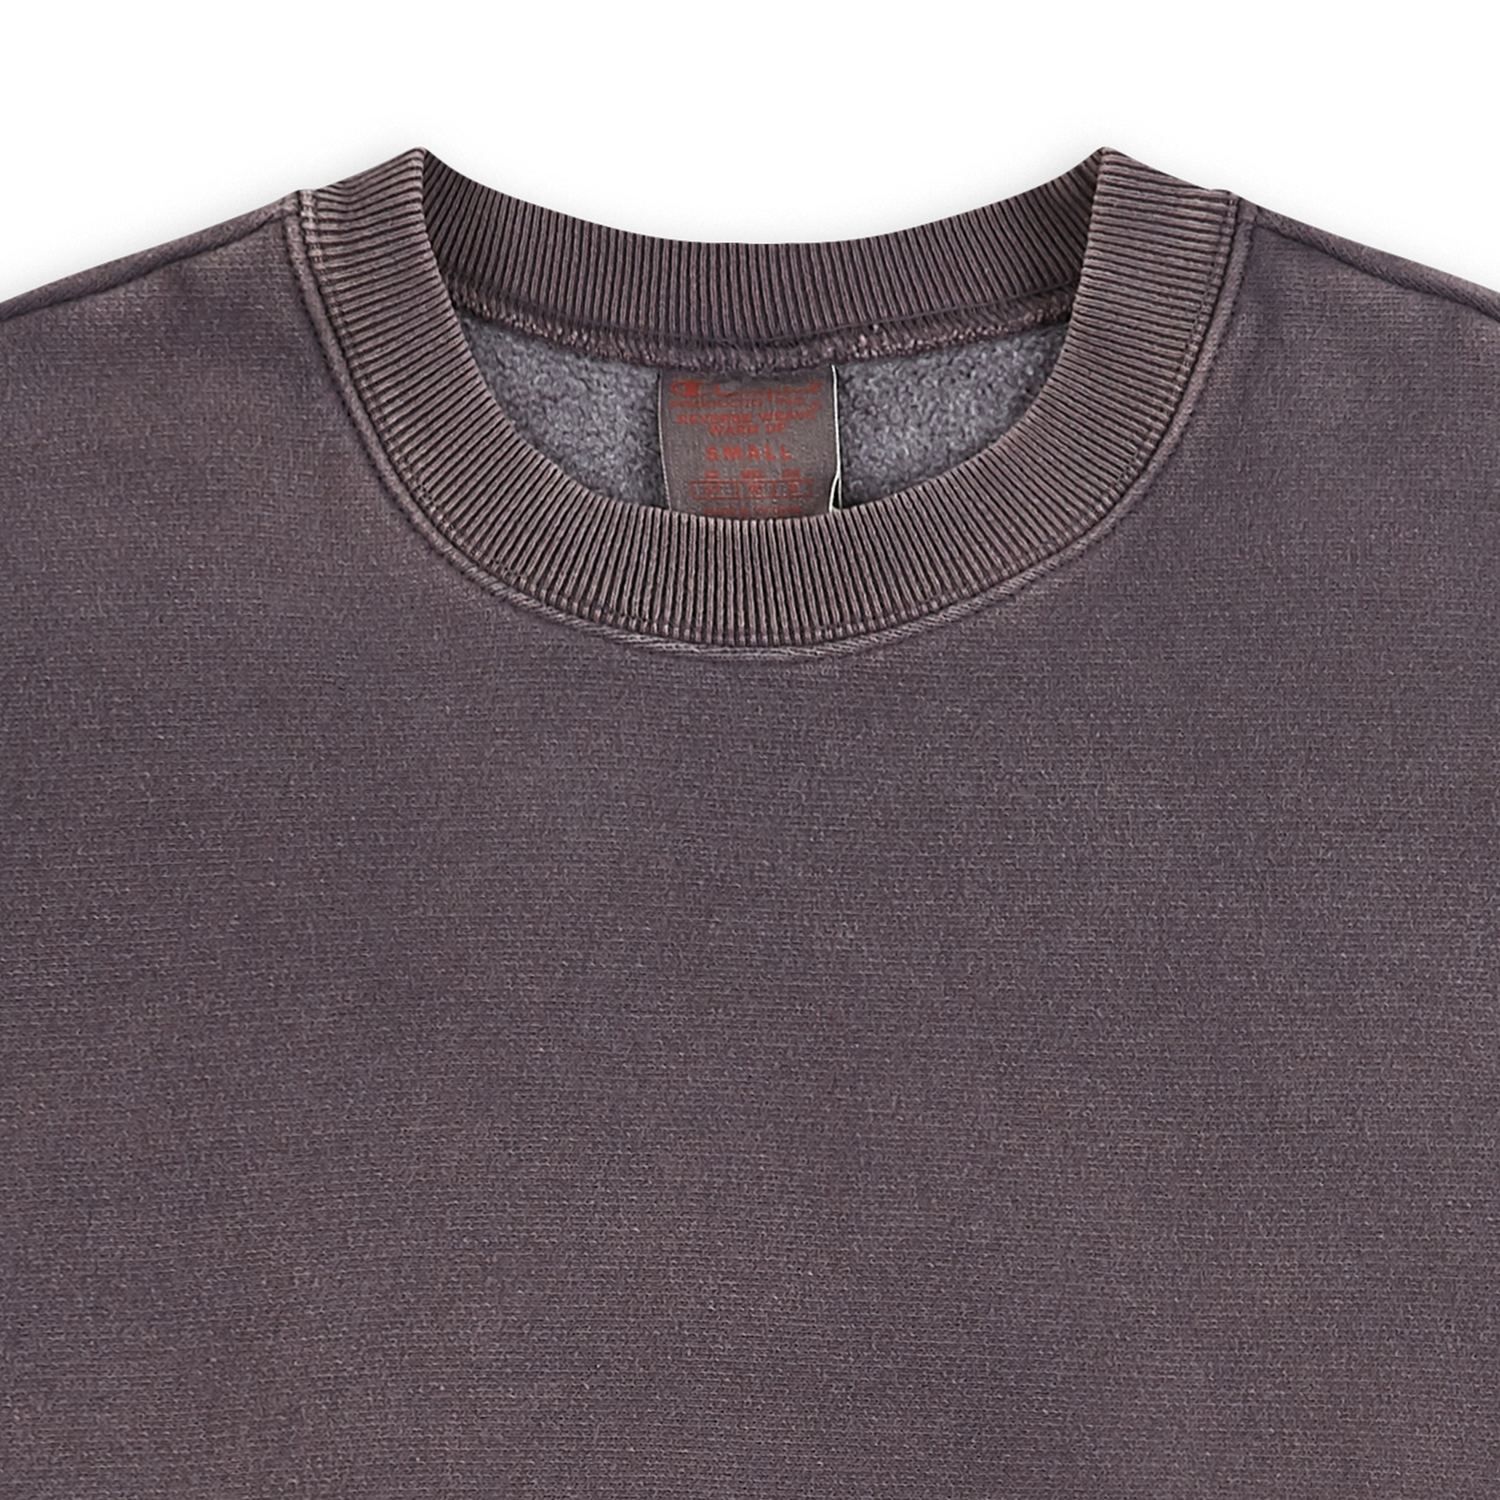  Champion Premium Acid Wash Reverse Weave Sweatshirt 